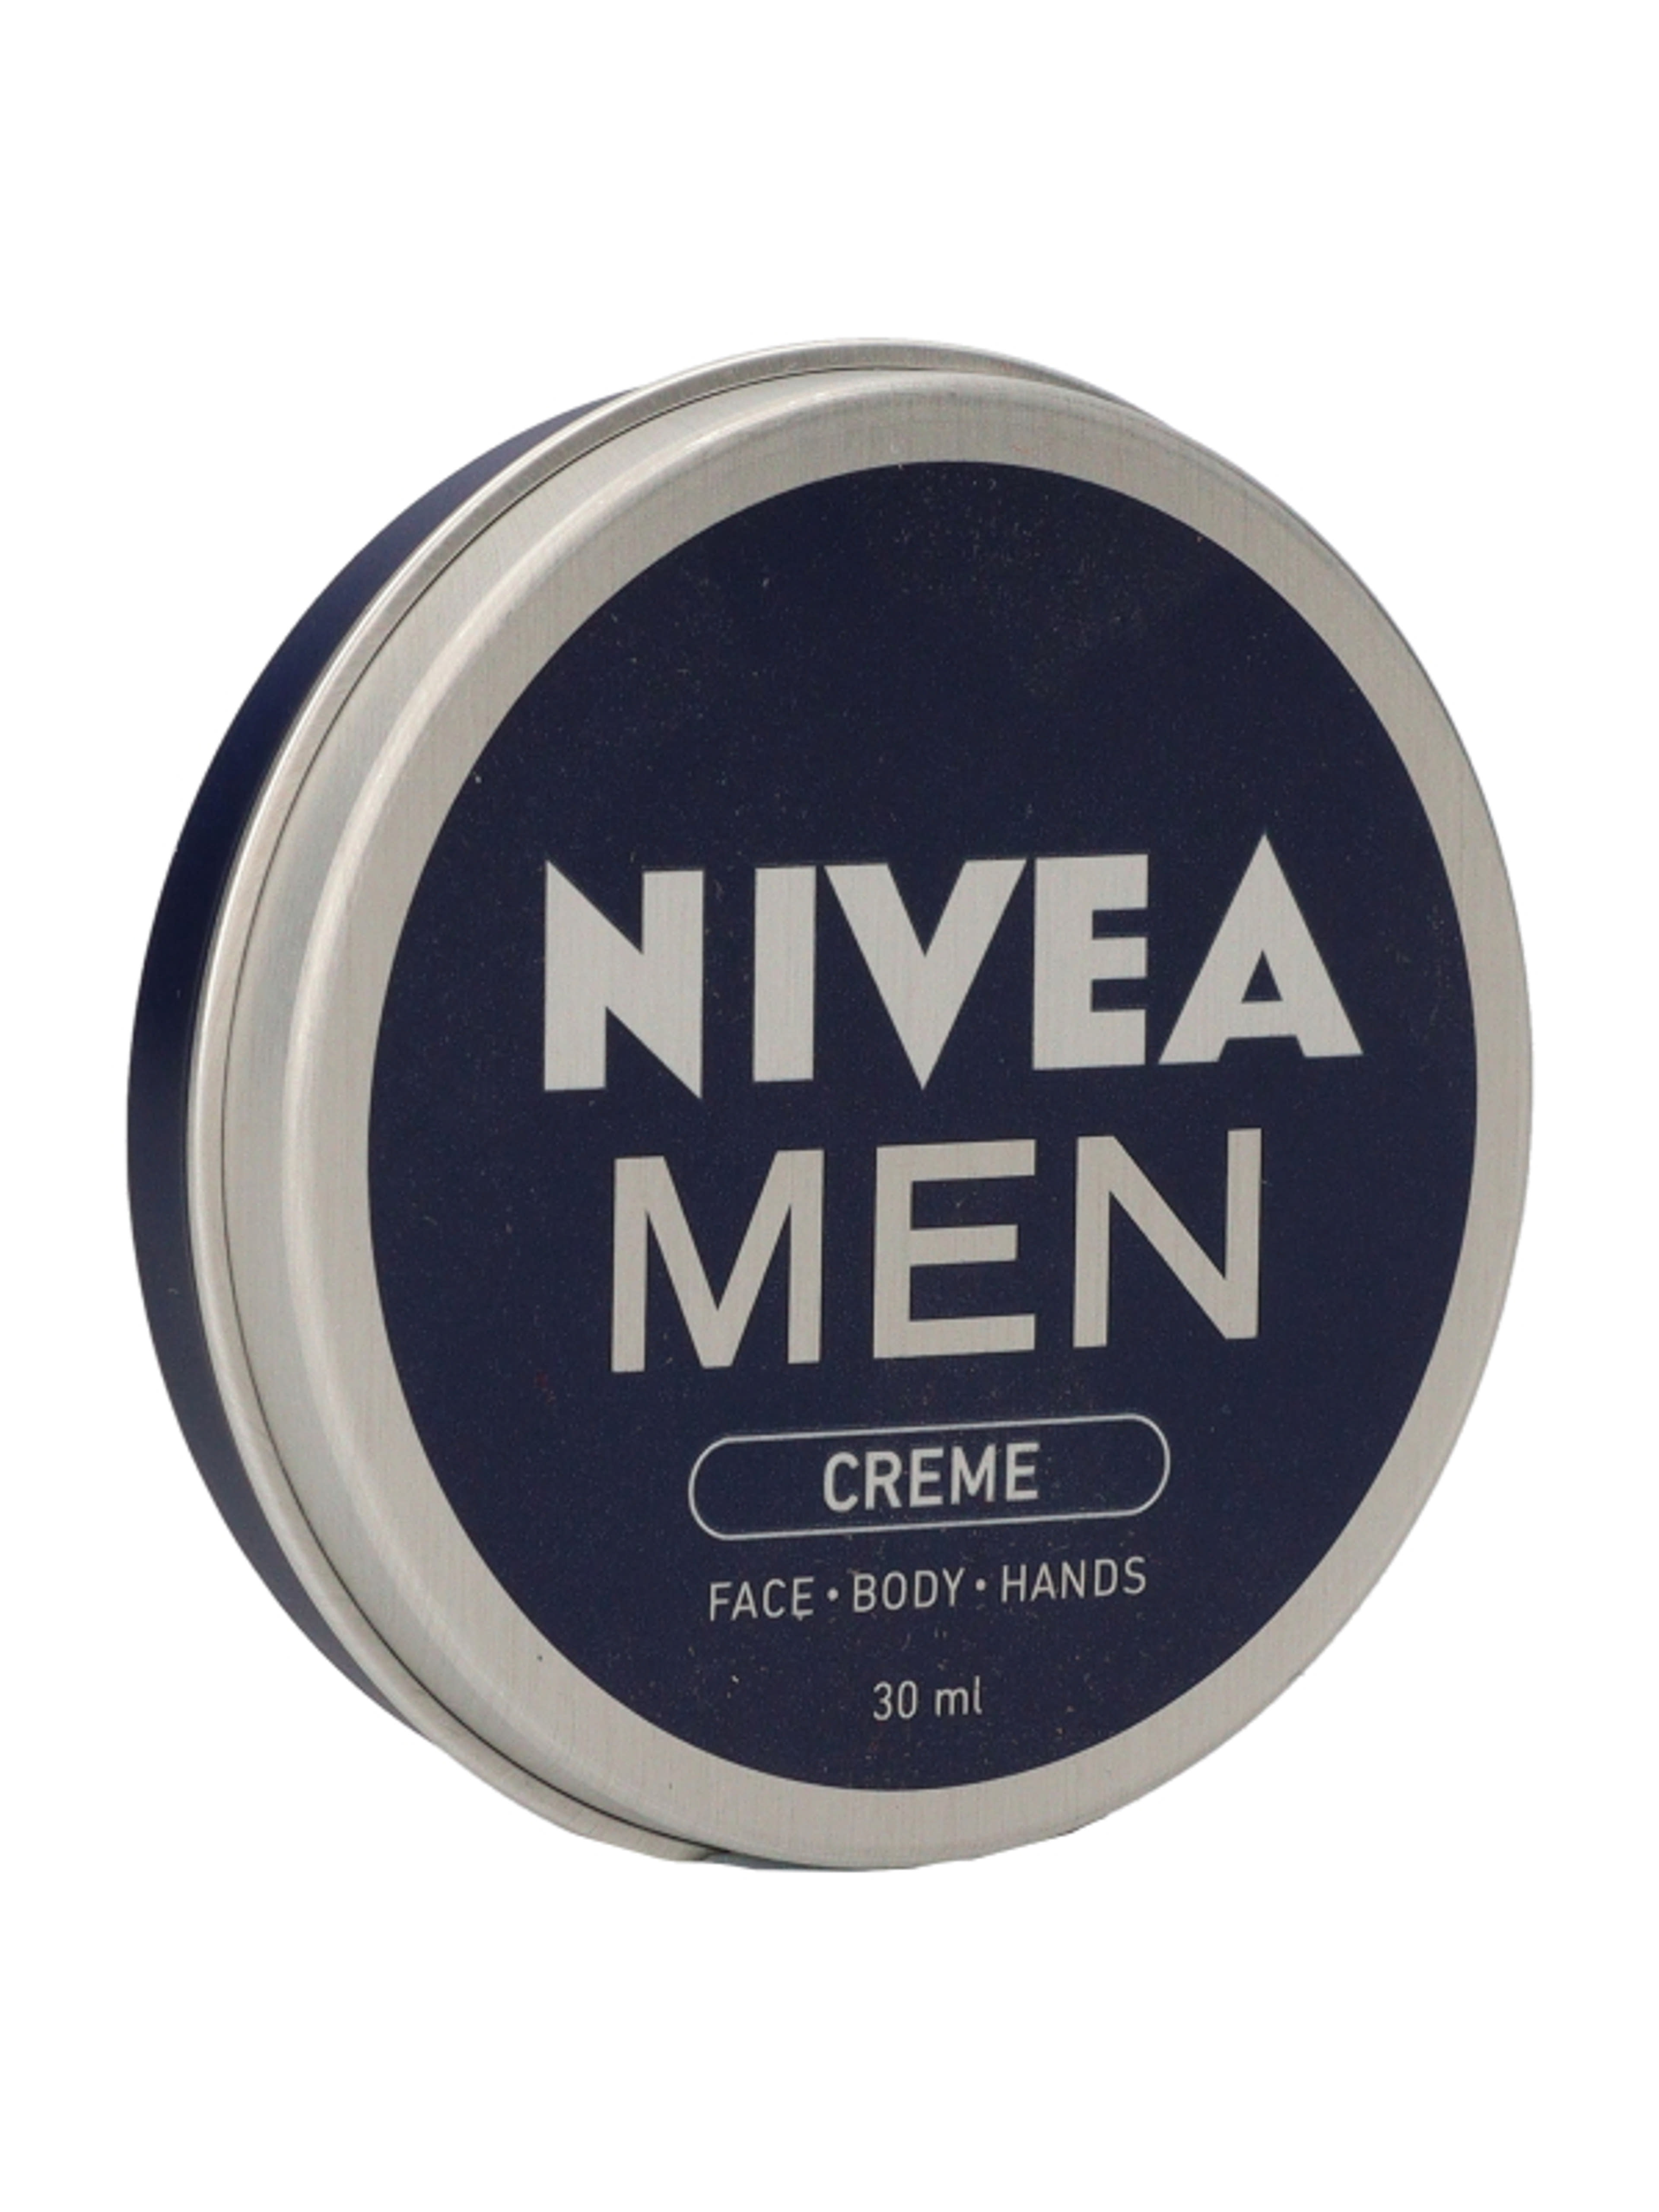 NIVEA MEN Creme - 30 ml-5